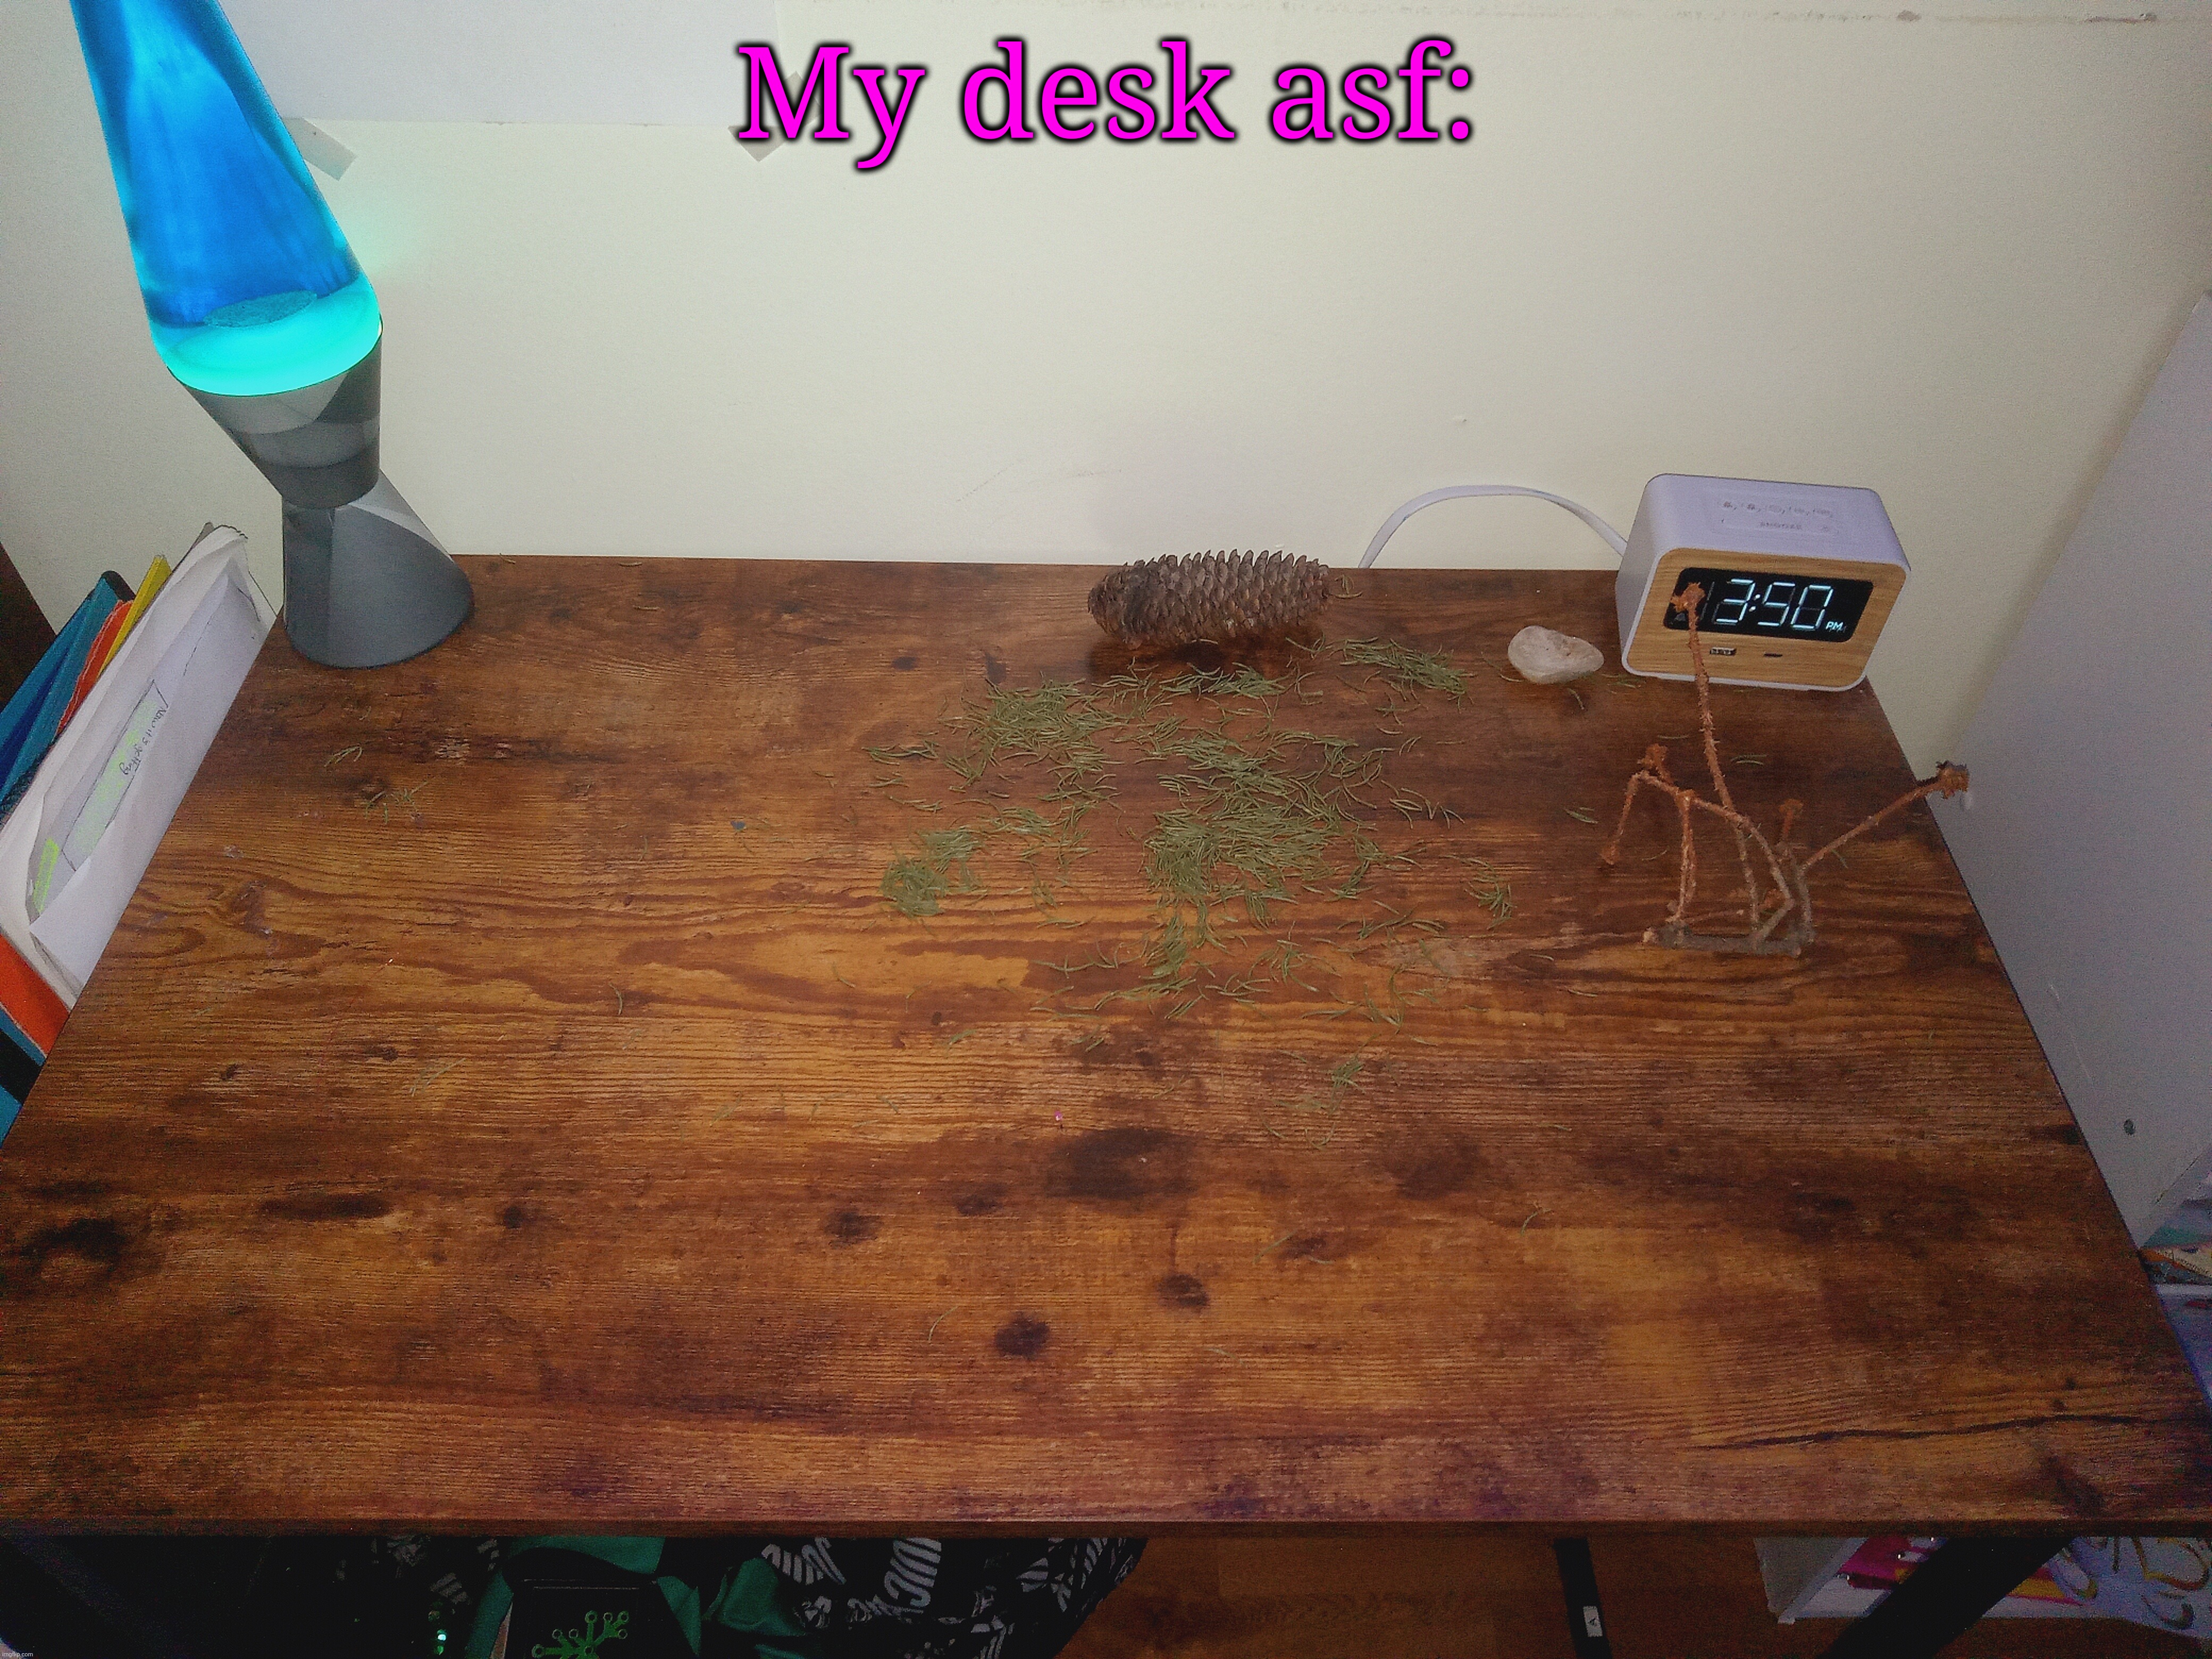 My desk asf: | made w/ Imgflip meme maker